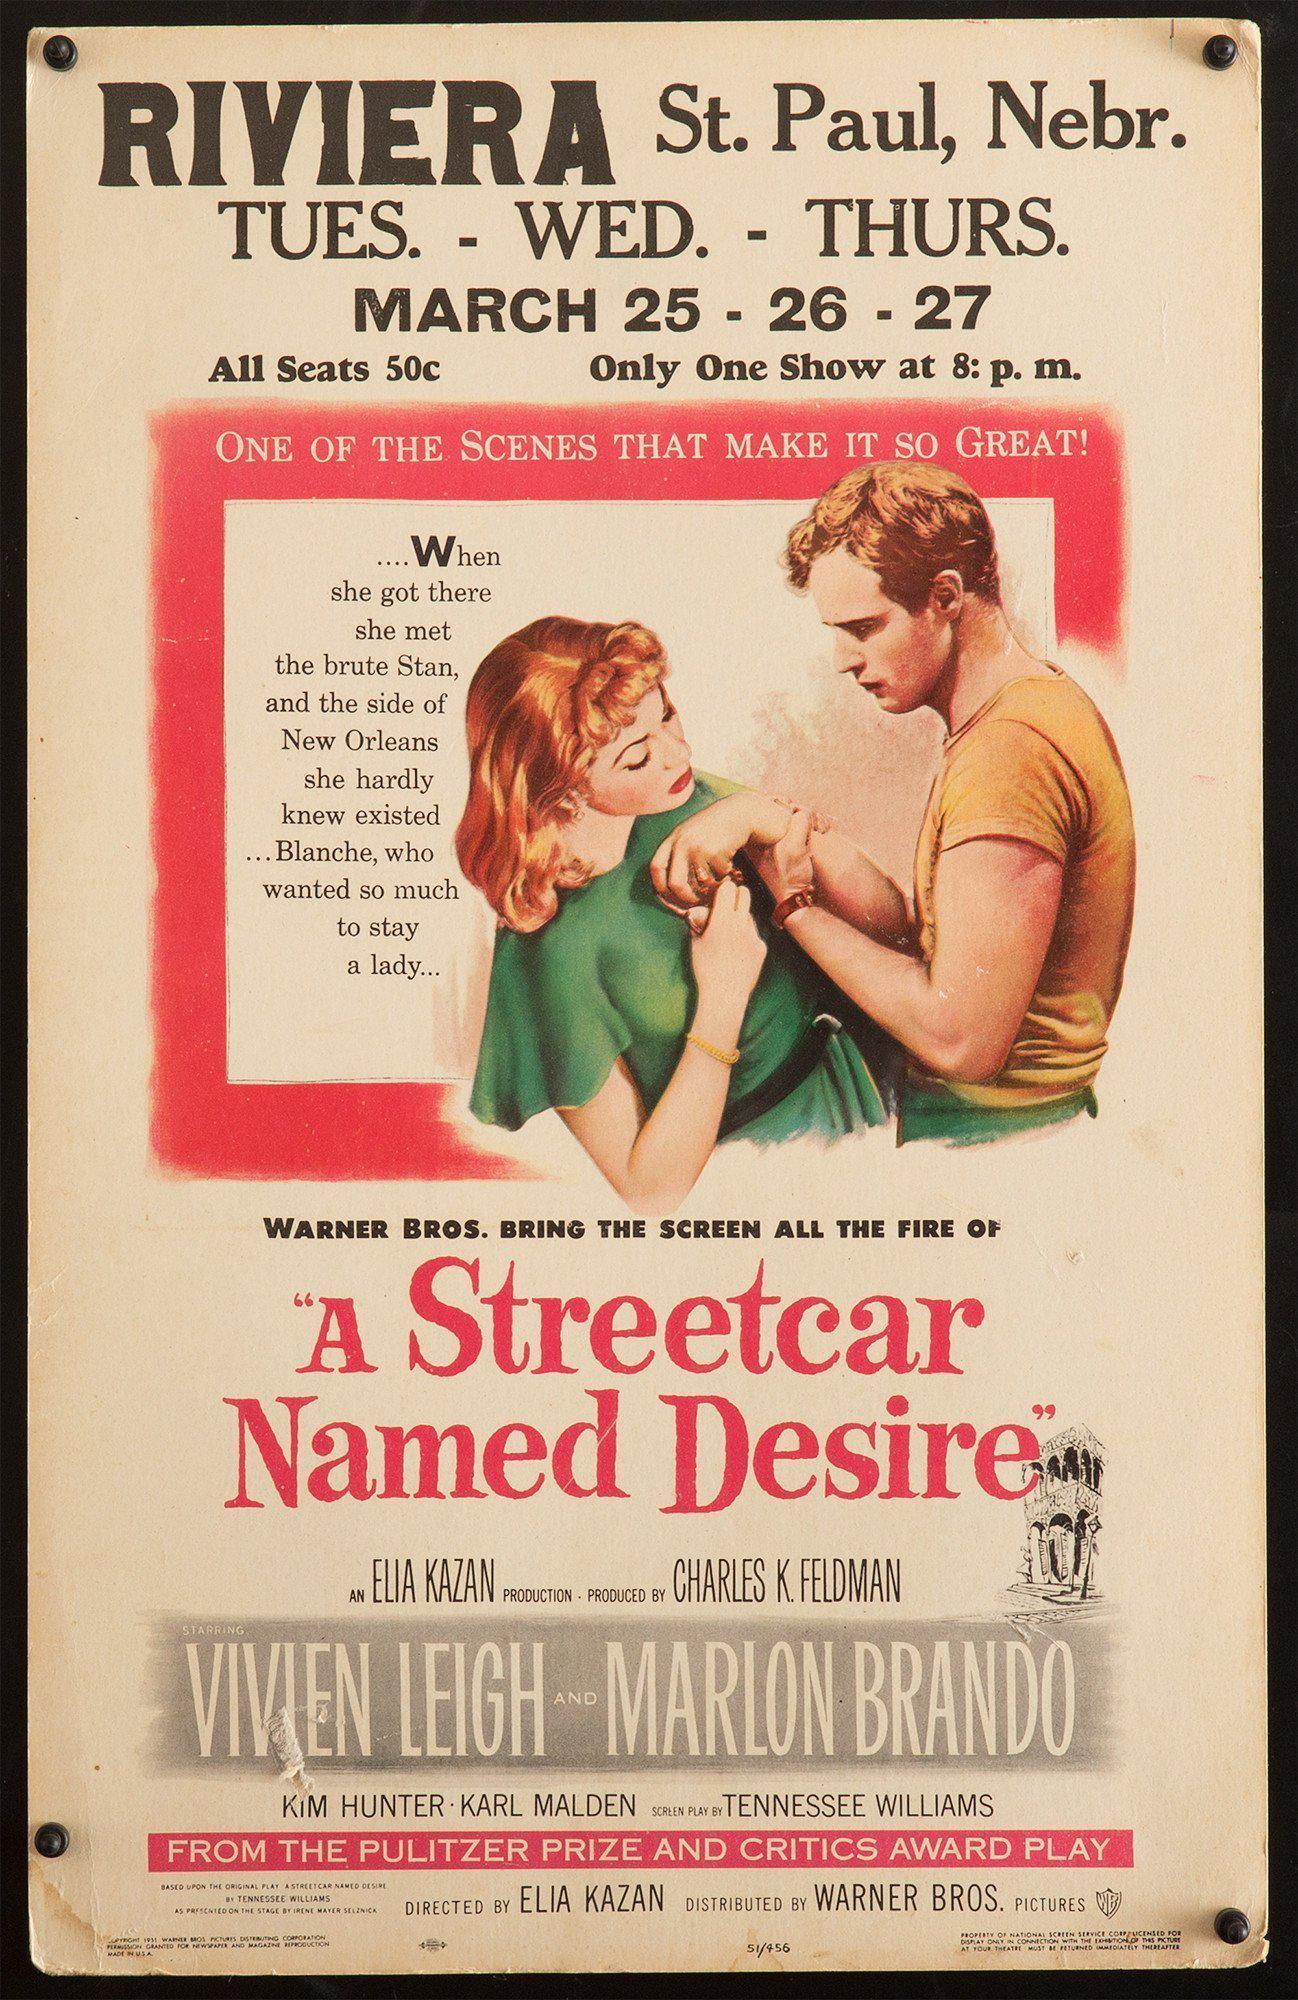 essay on a street car named desire